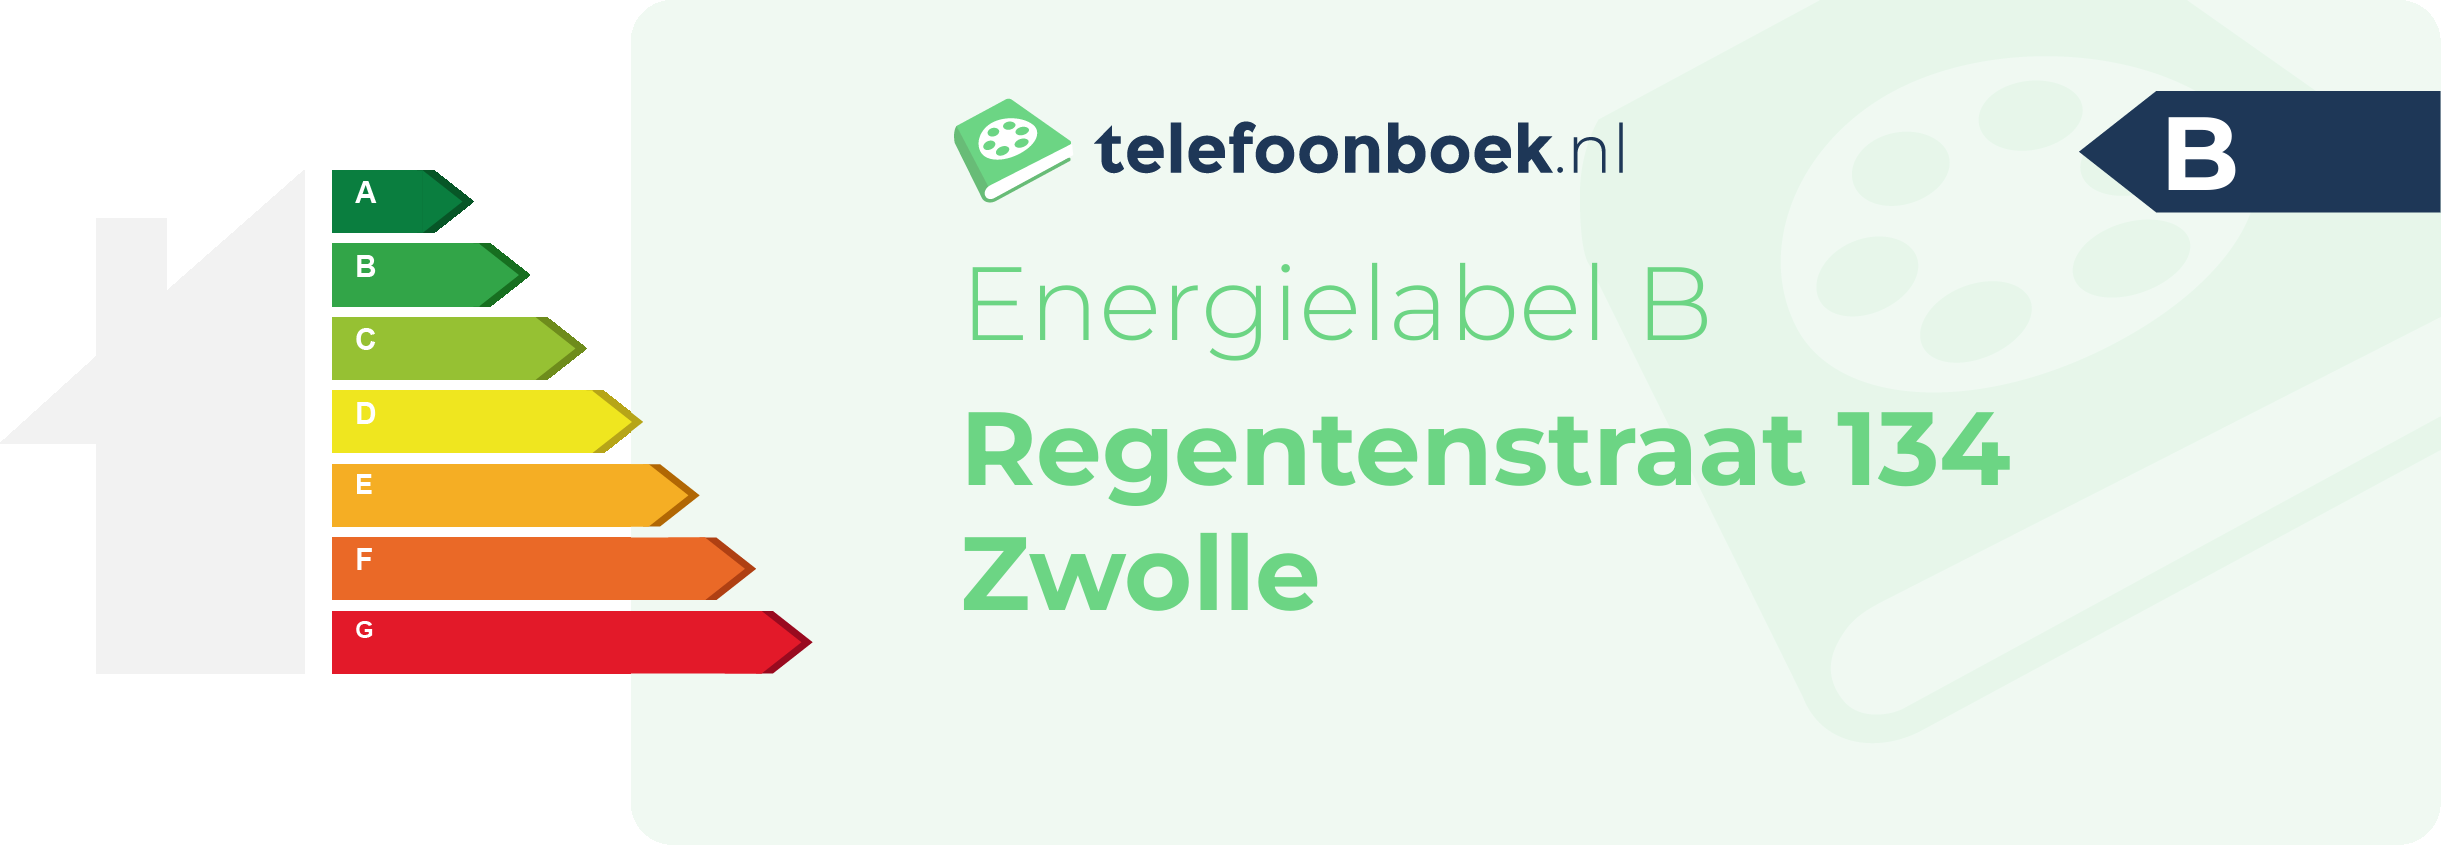 Energielabel Regentenstraat 134 Zwolle